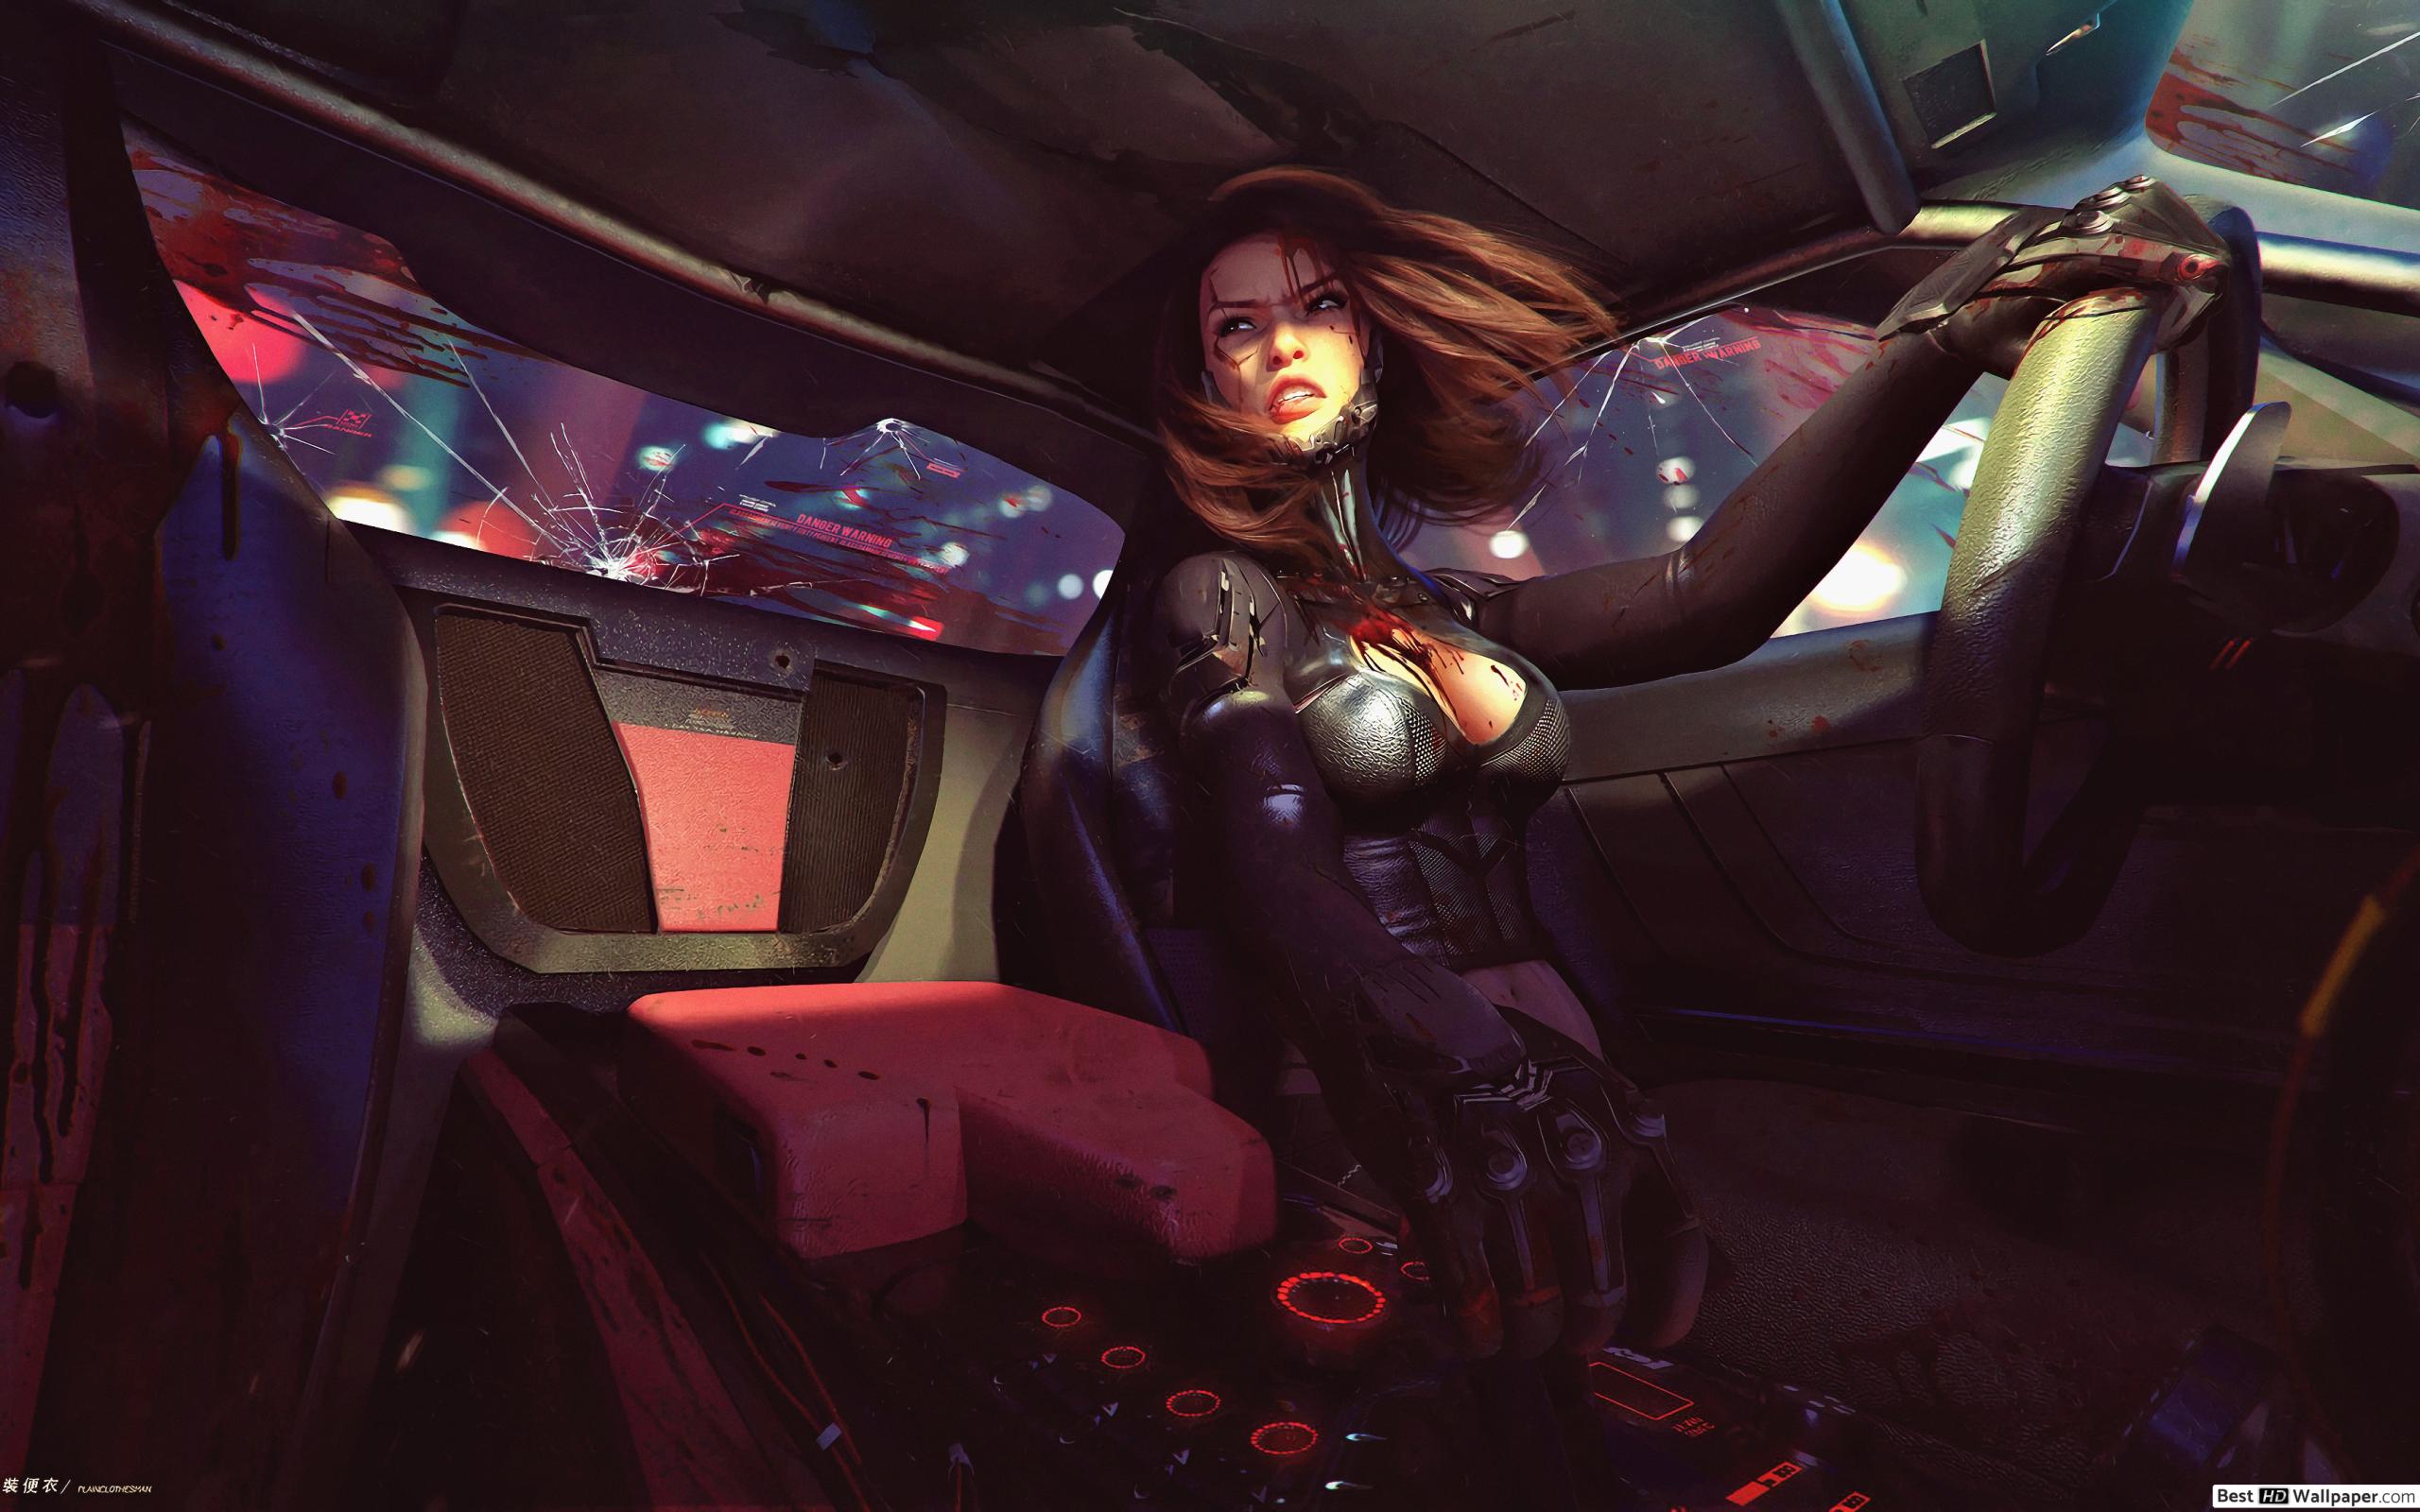 Cyberpunk 2077 (Injured Cyborg Girl) HD wallpaper download